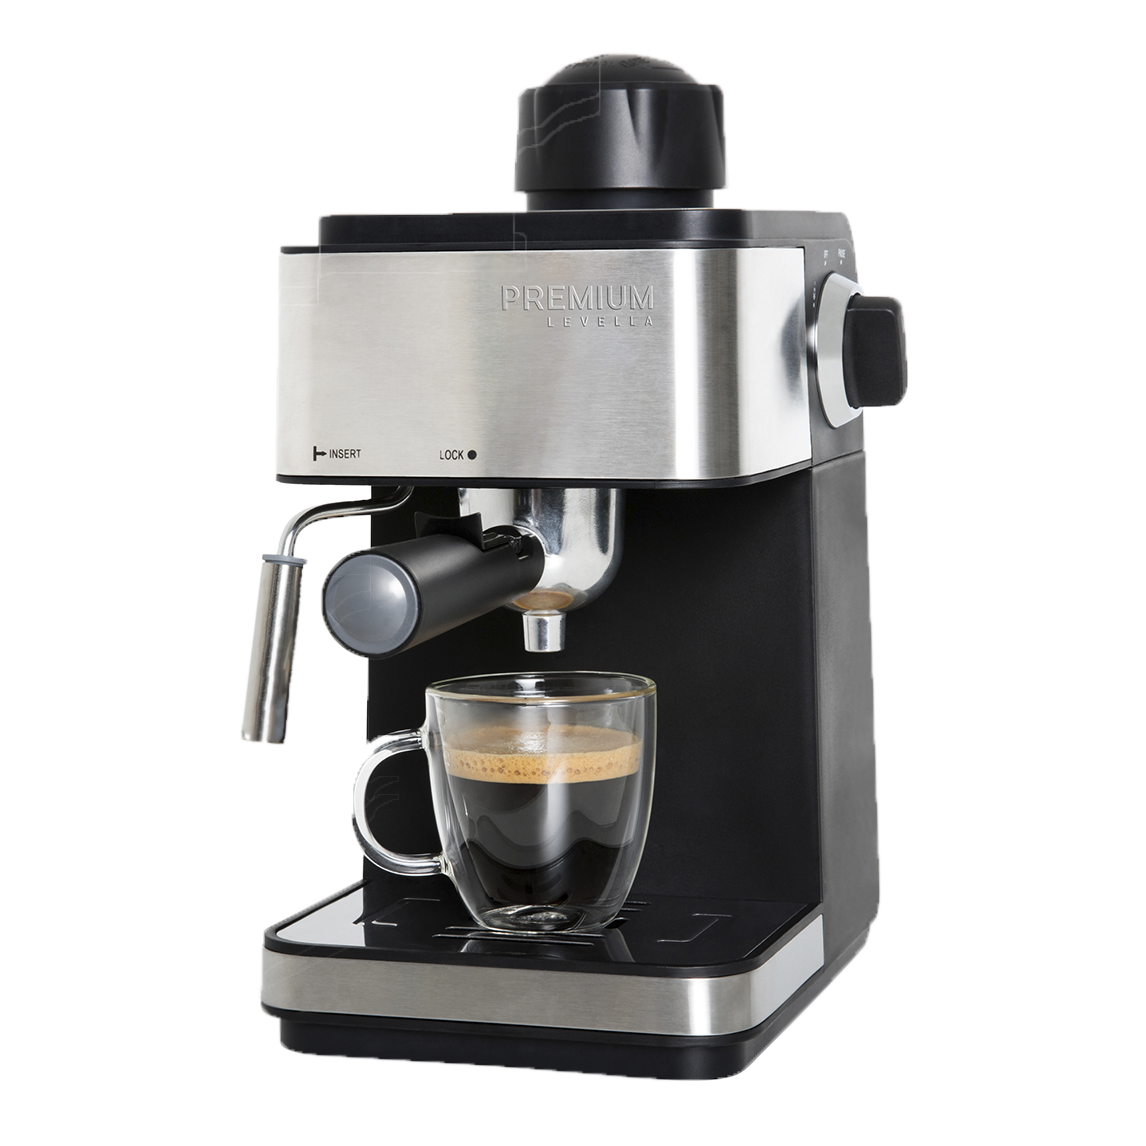 Premium - 3-In-1 Steam Espresso, Cappuccino and Latte Machine 3.5 Bar Pressure